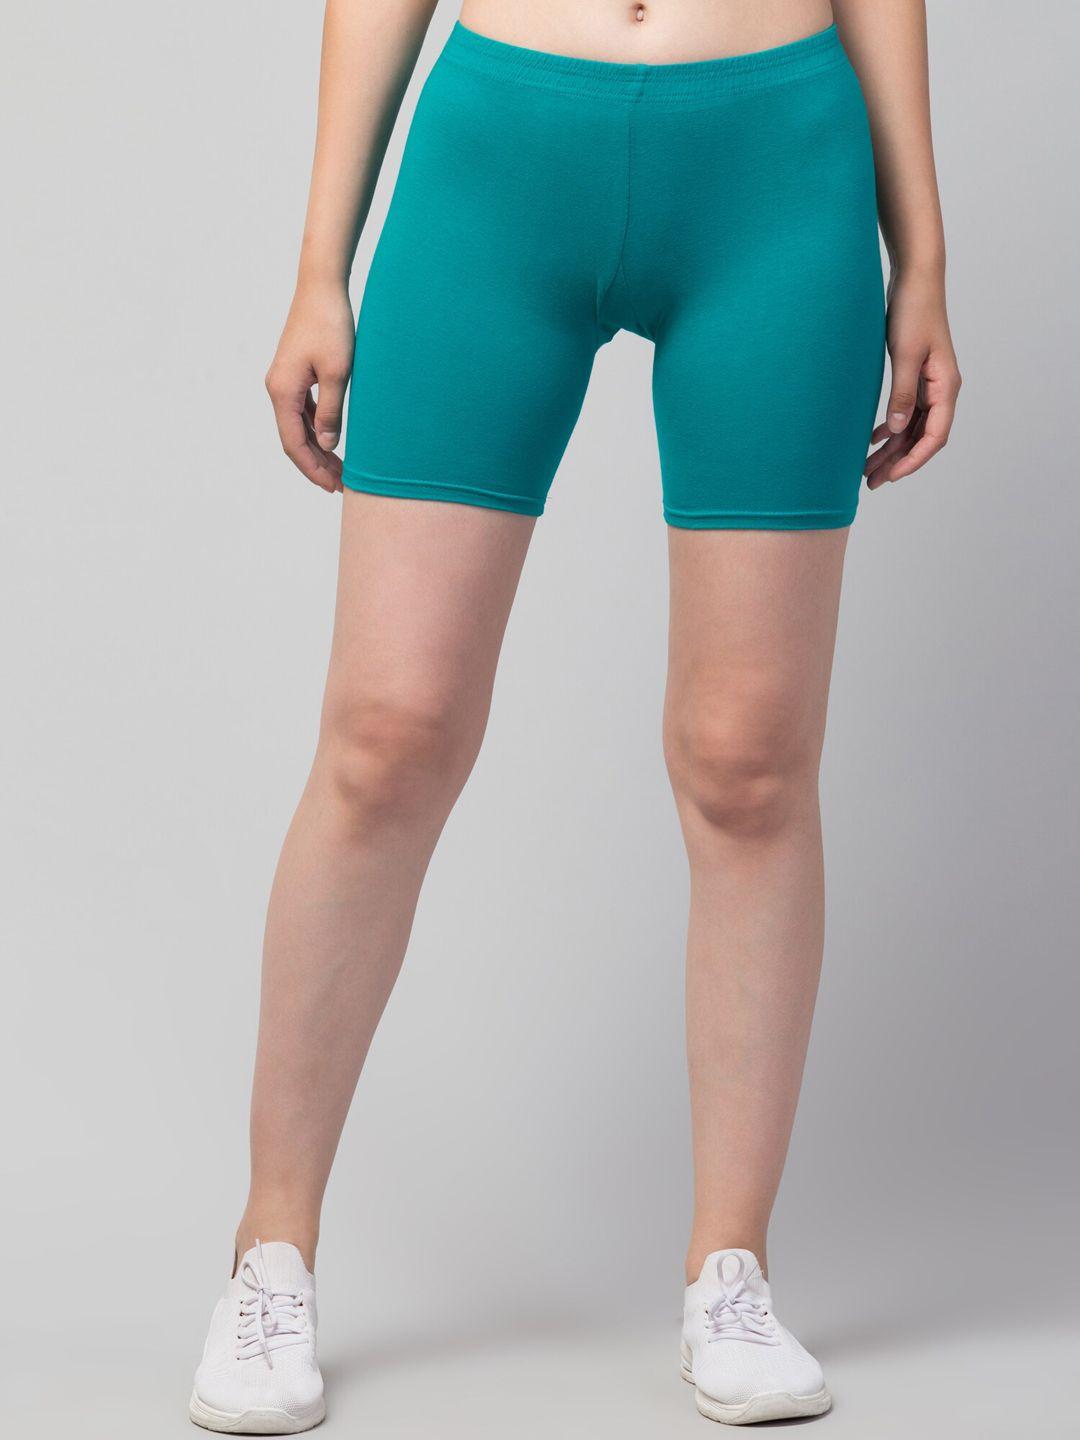 apraa-&-parma-women-skinny-fit-pure-cotton-sports-shorts